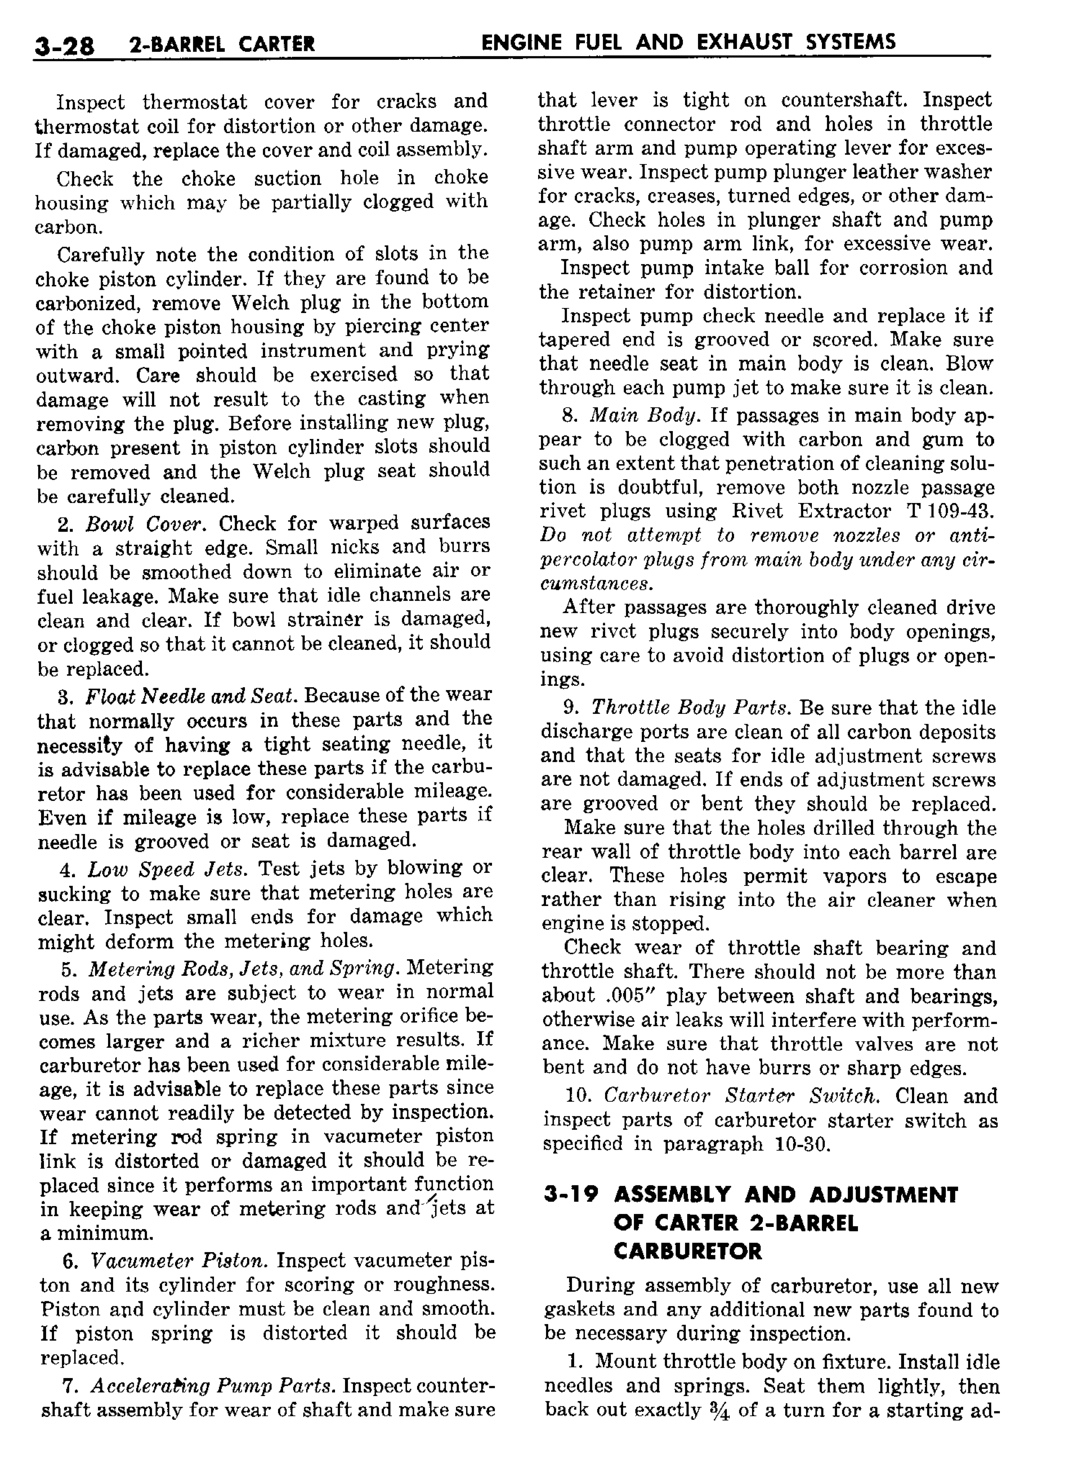 n_04 1960 Buick Shop Manual - Engine Fuel & Exhaust-028-028.jpg